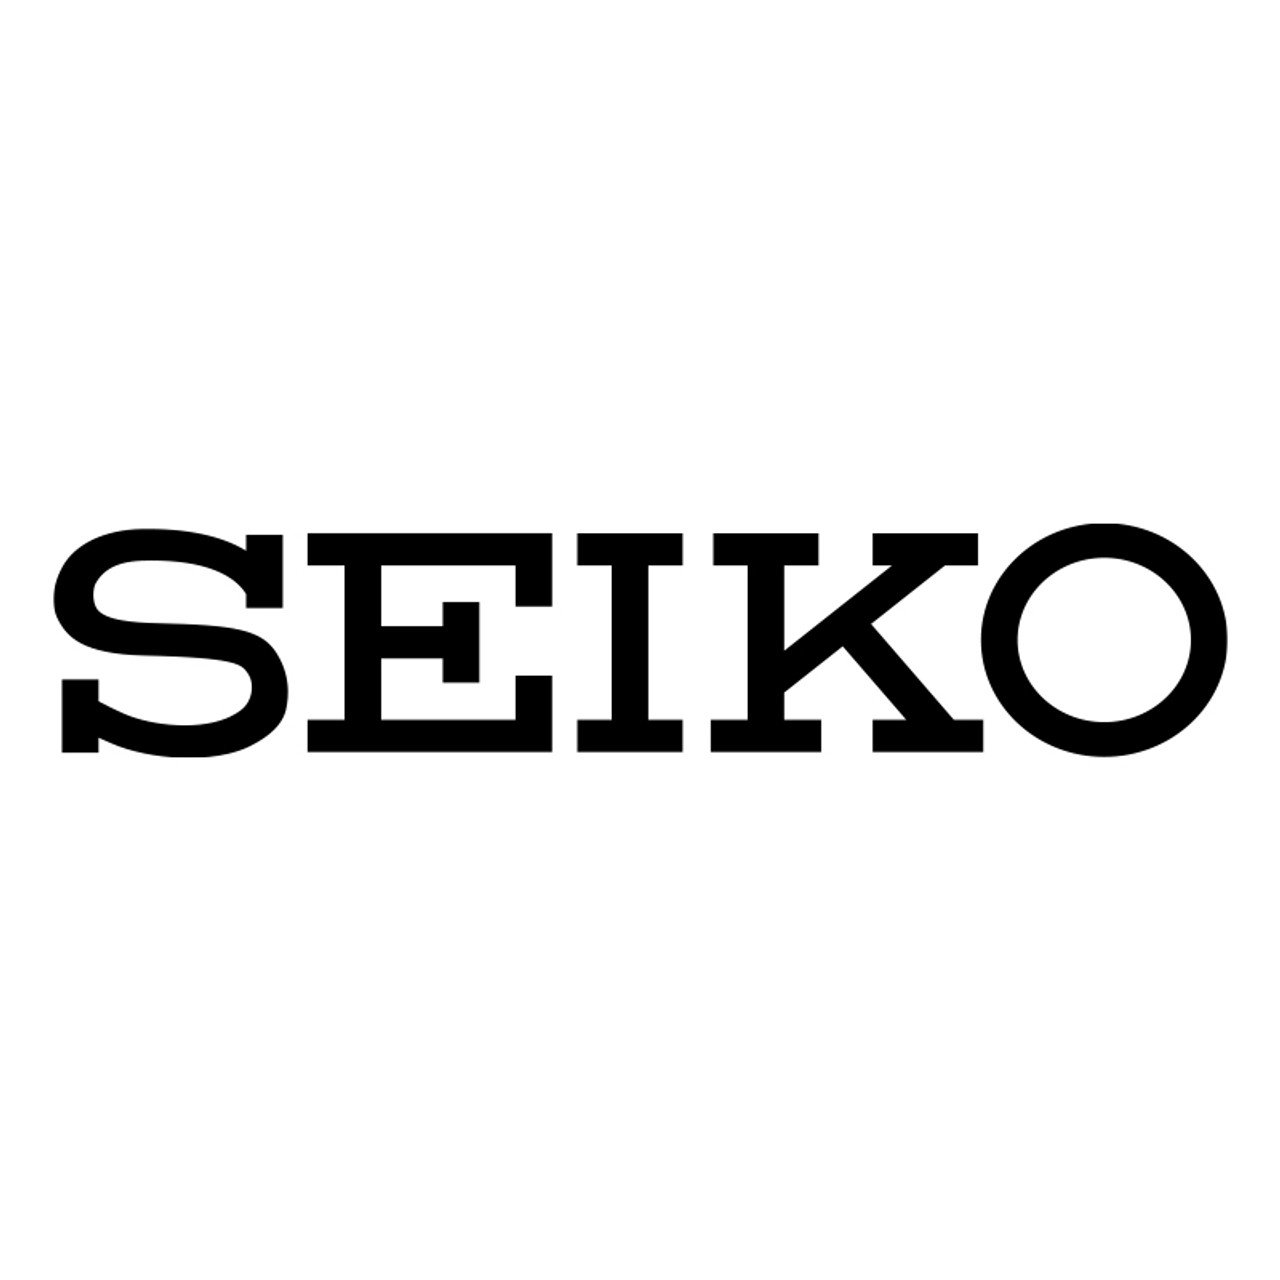 Seiko 7N42 - Seiko Watch Movements | All Time Co.